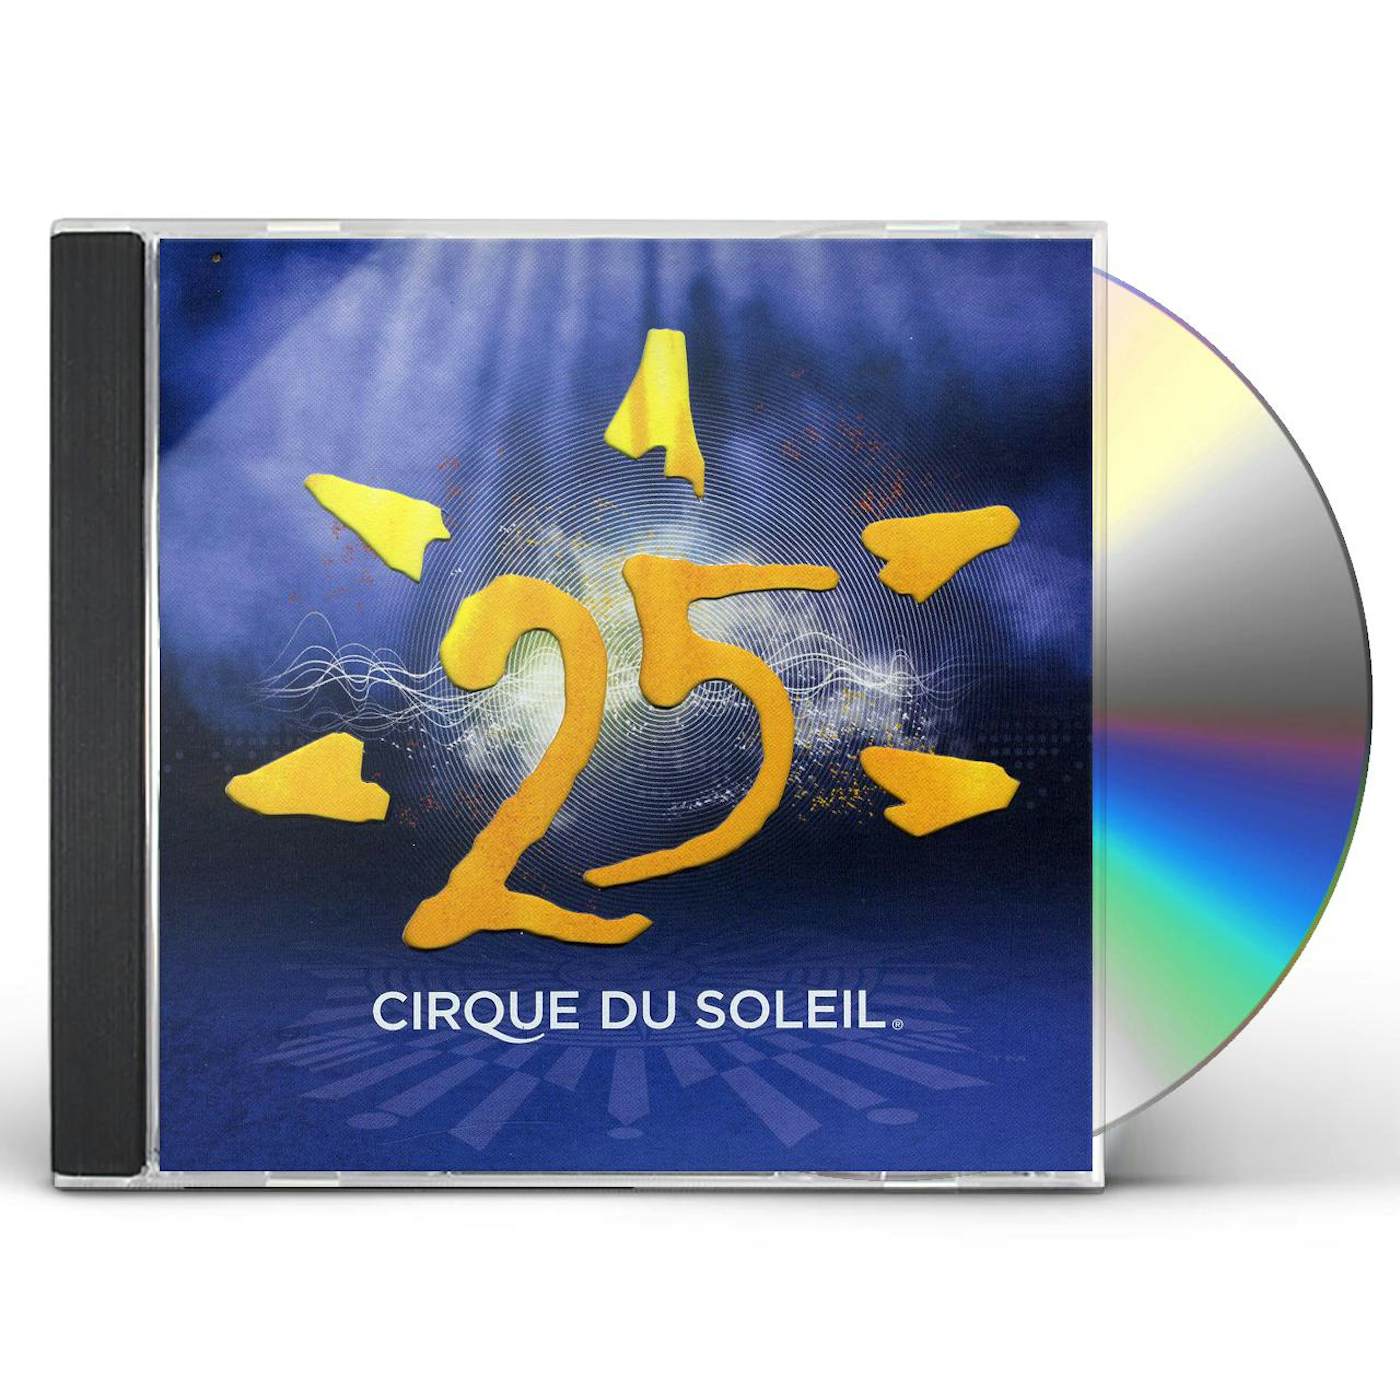 Cirque du Soleil 25 CD